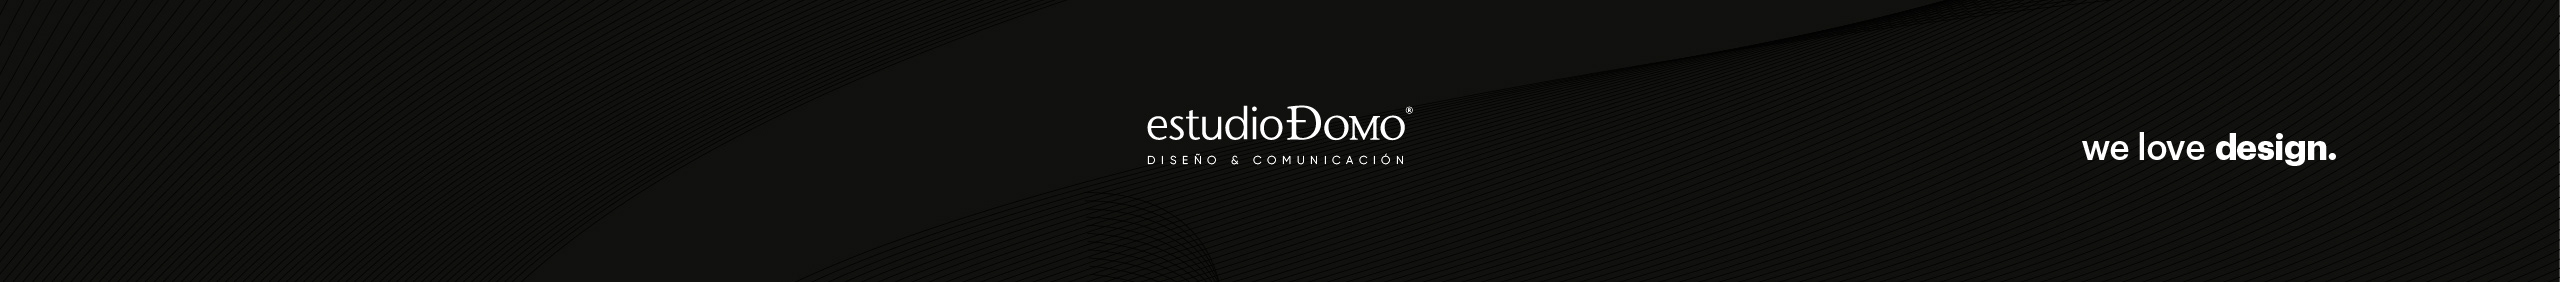 estudio Domo's profile banner